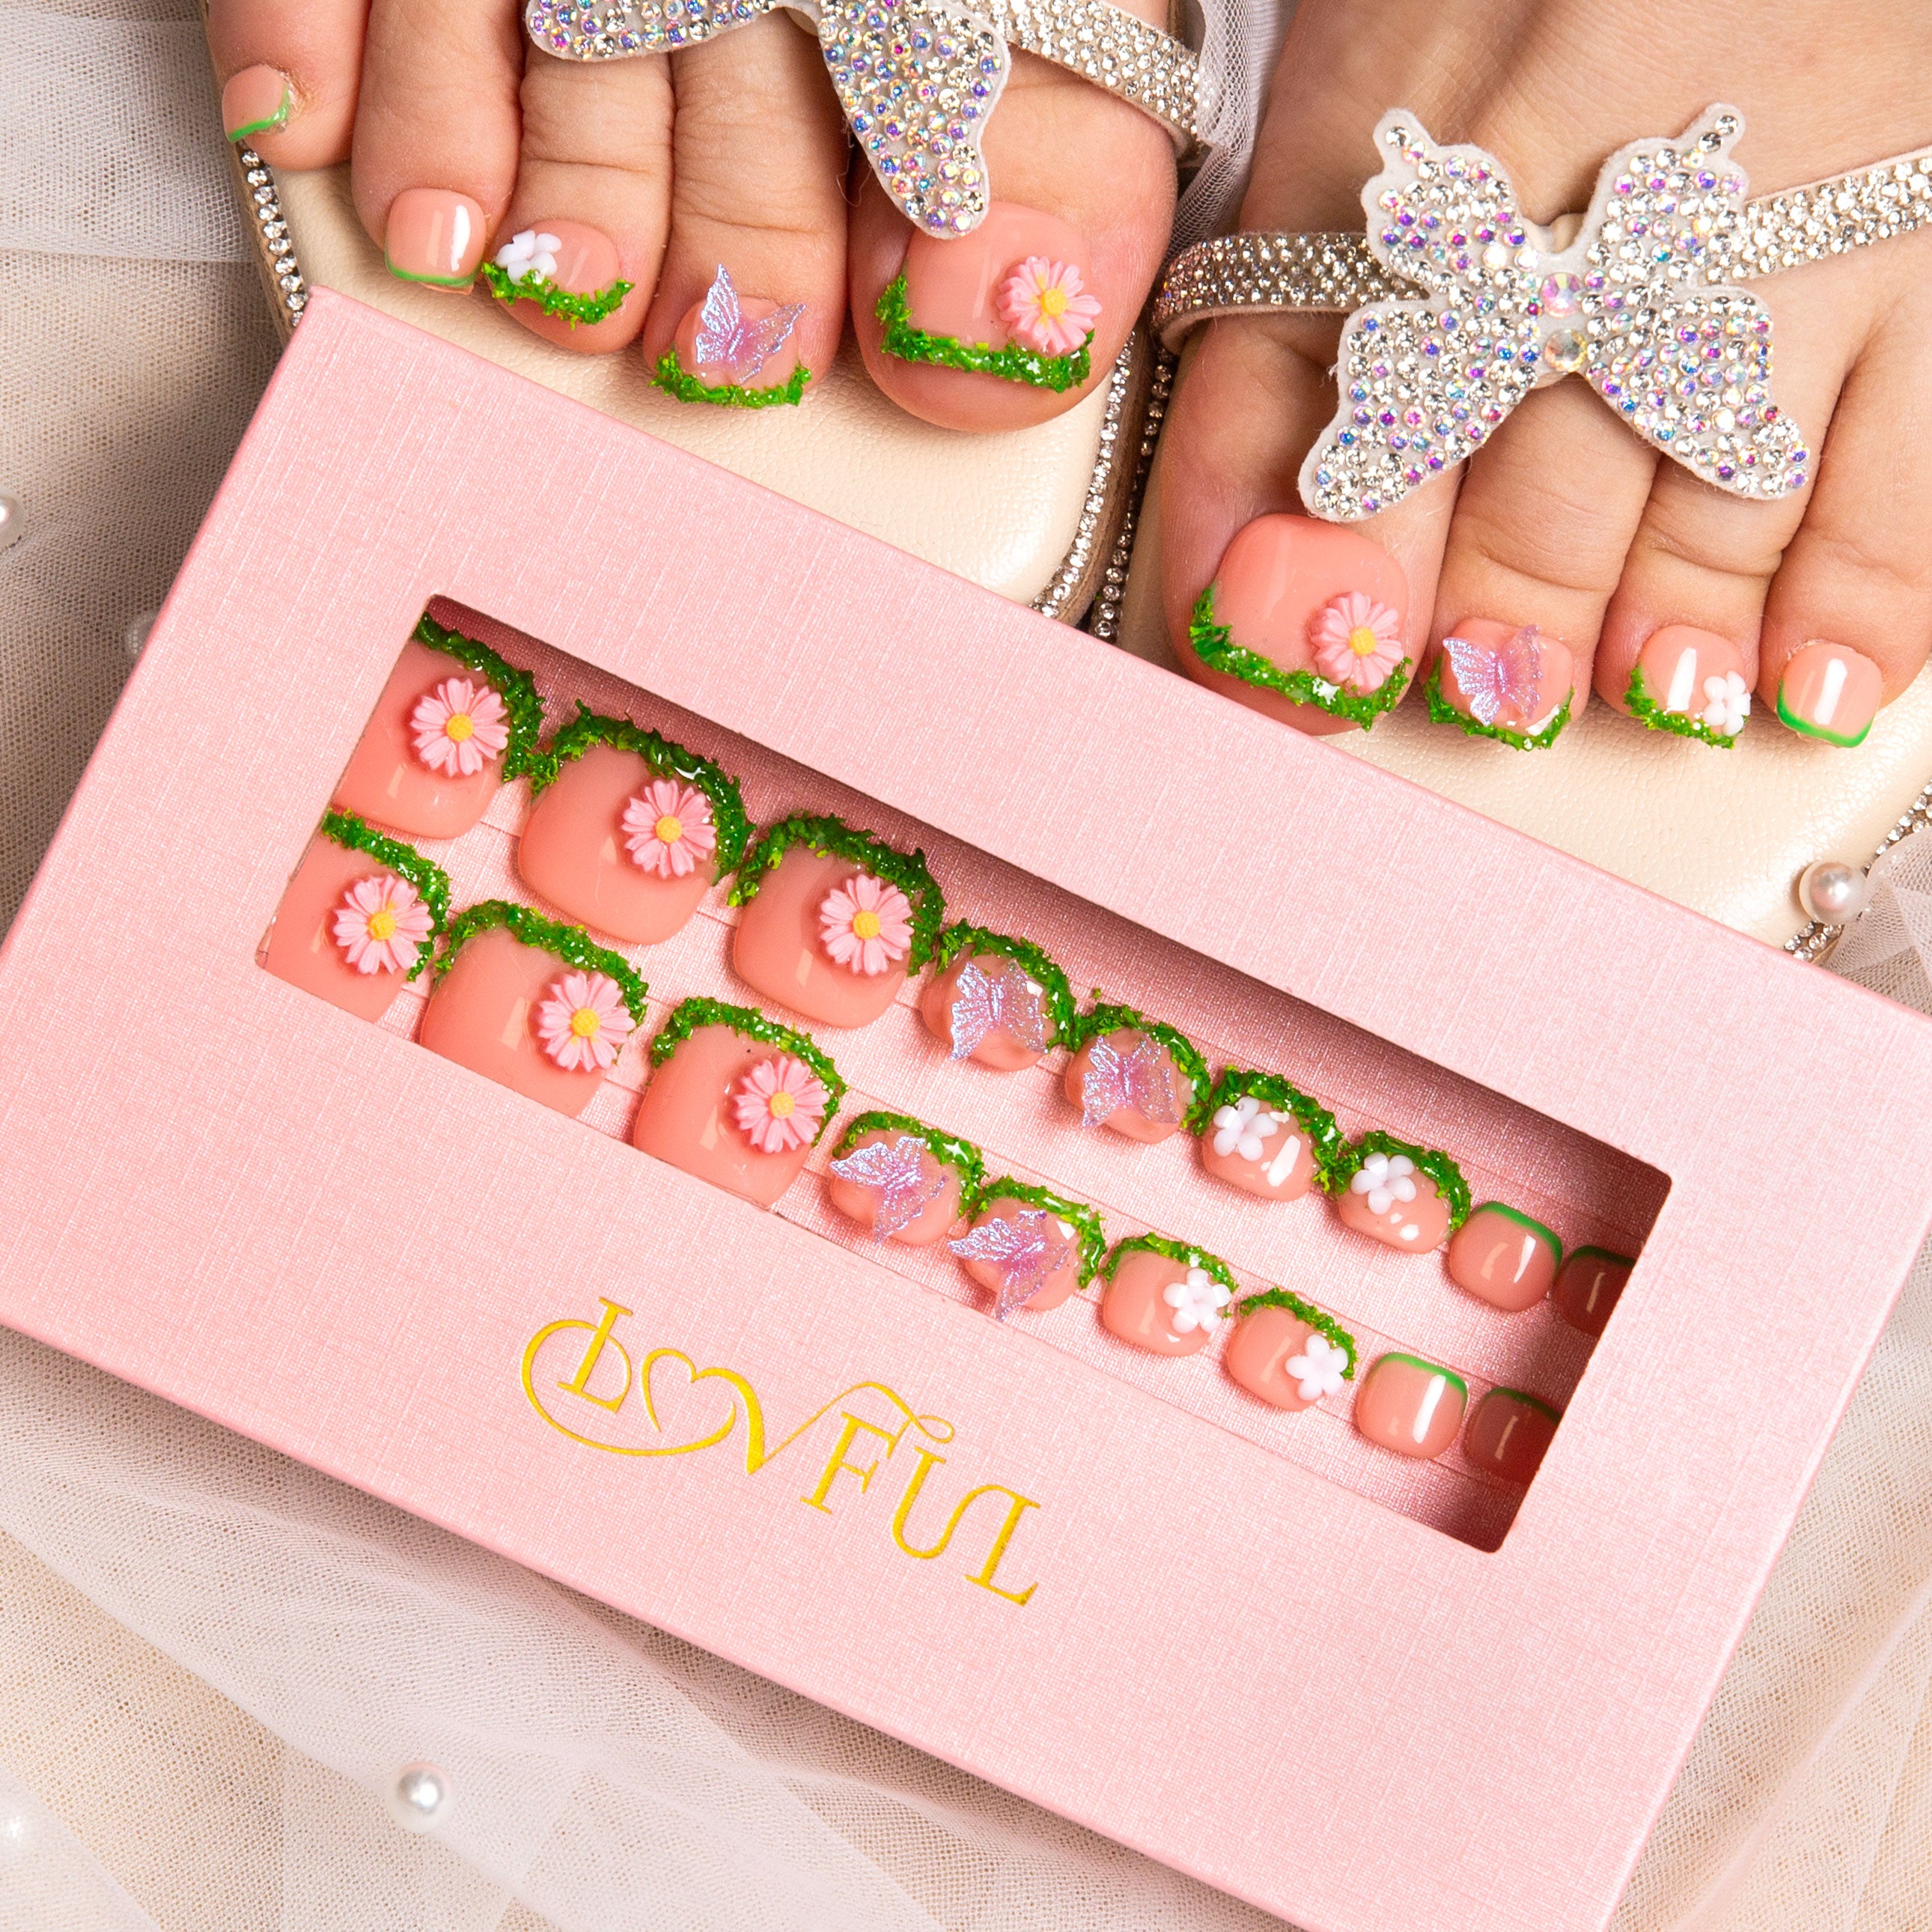 fairy tale garden toe nails